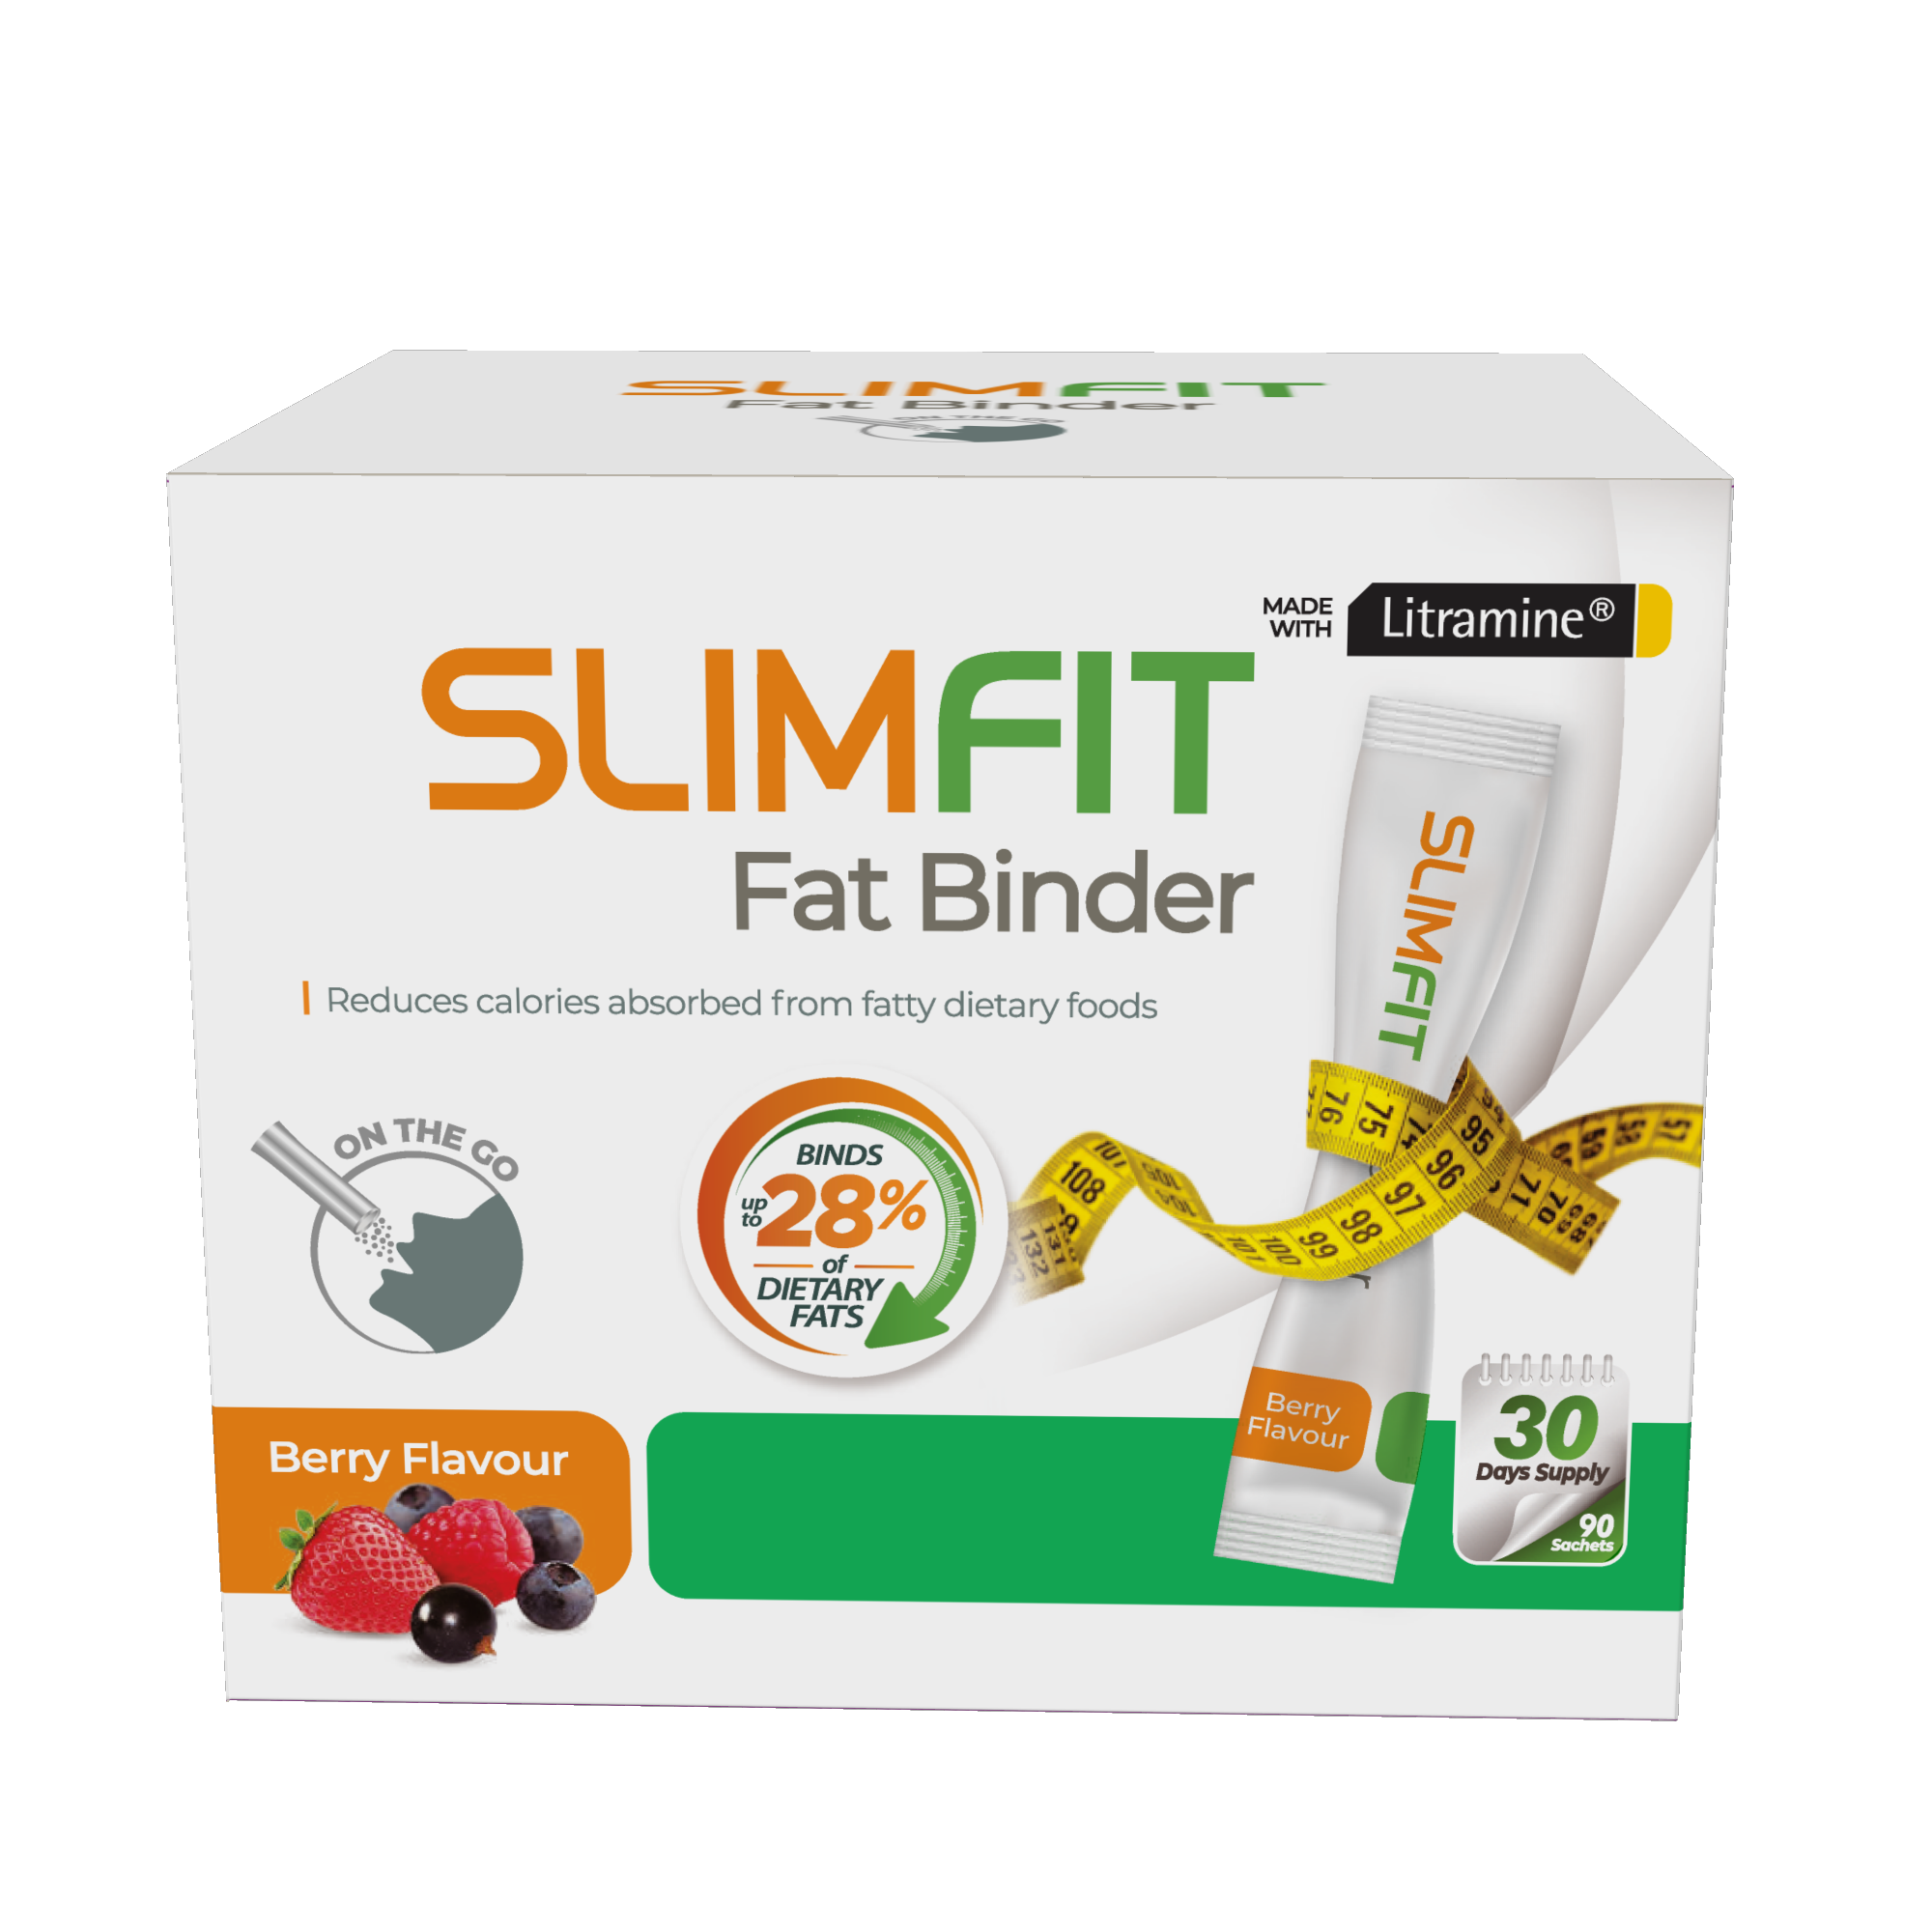 slimfit-fat-binder-90-blank-front-panel-front-260723